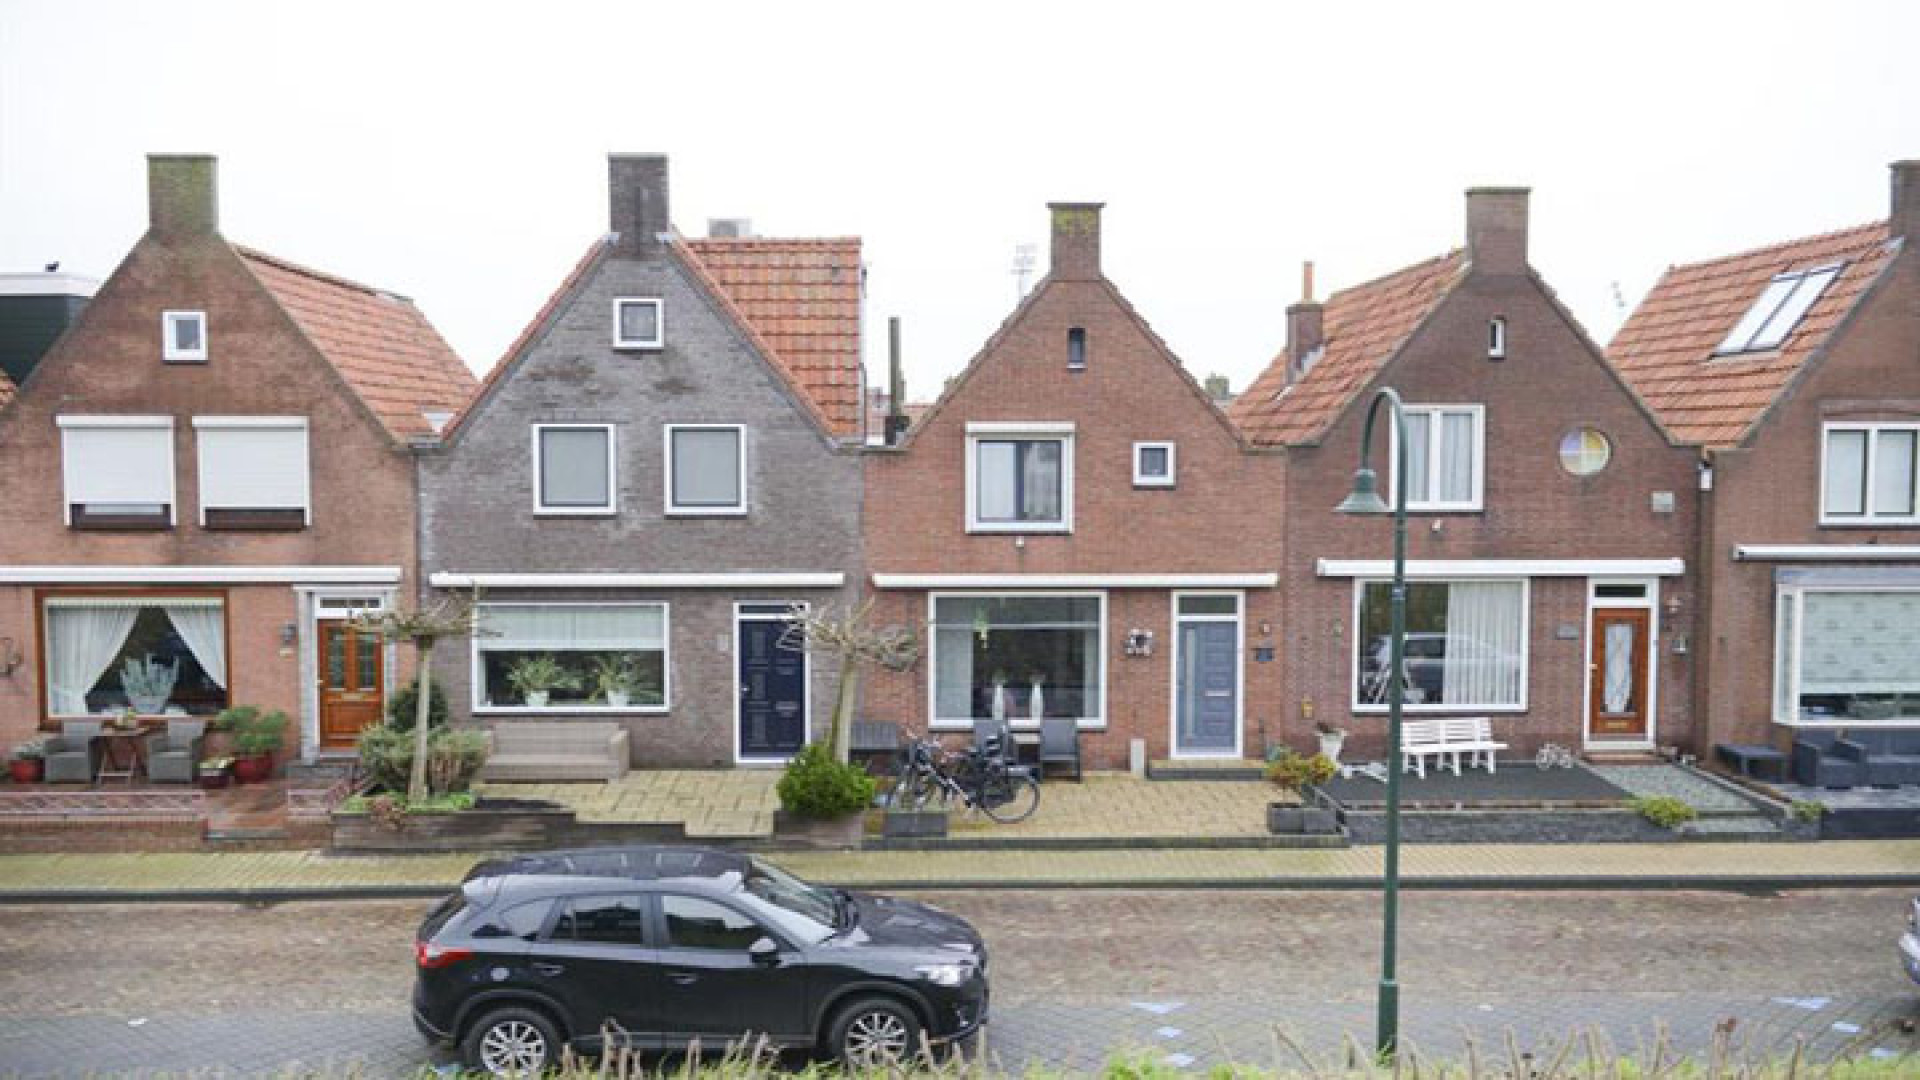 Yolanthe zet gerestylde Volendamse woning met forse korting te koop! Zie foto's